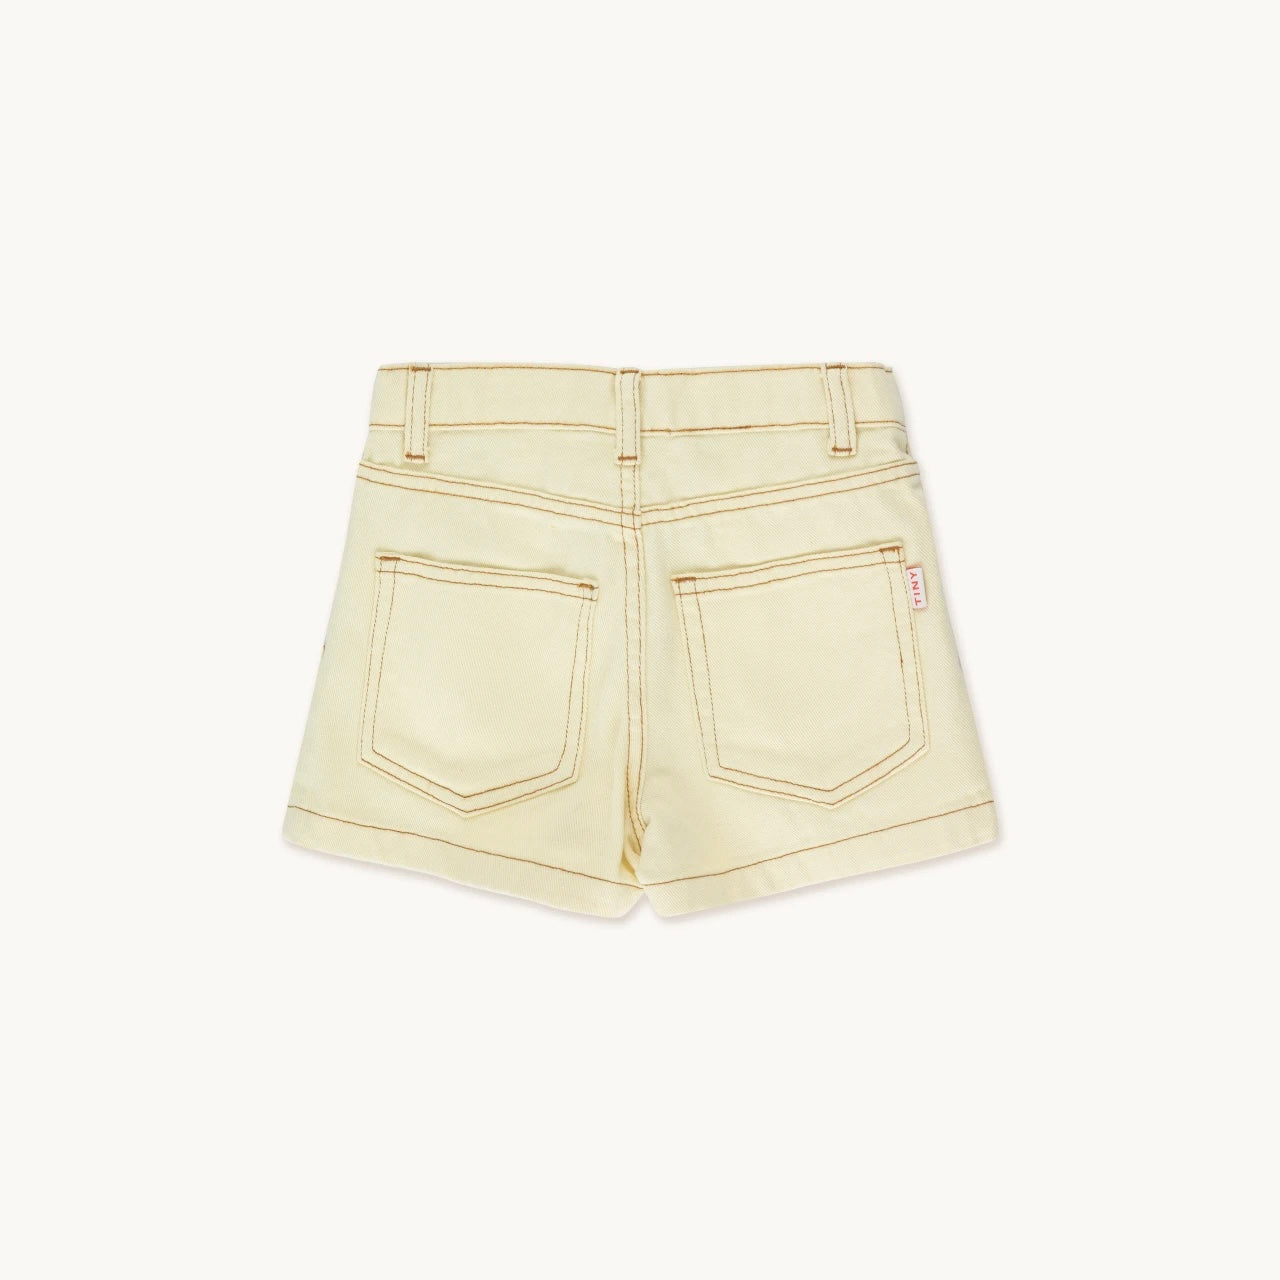 Apple Shorts